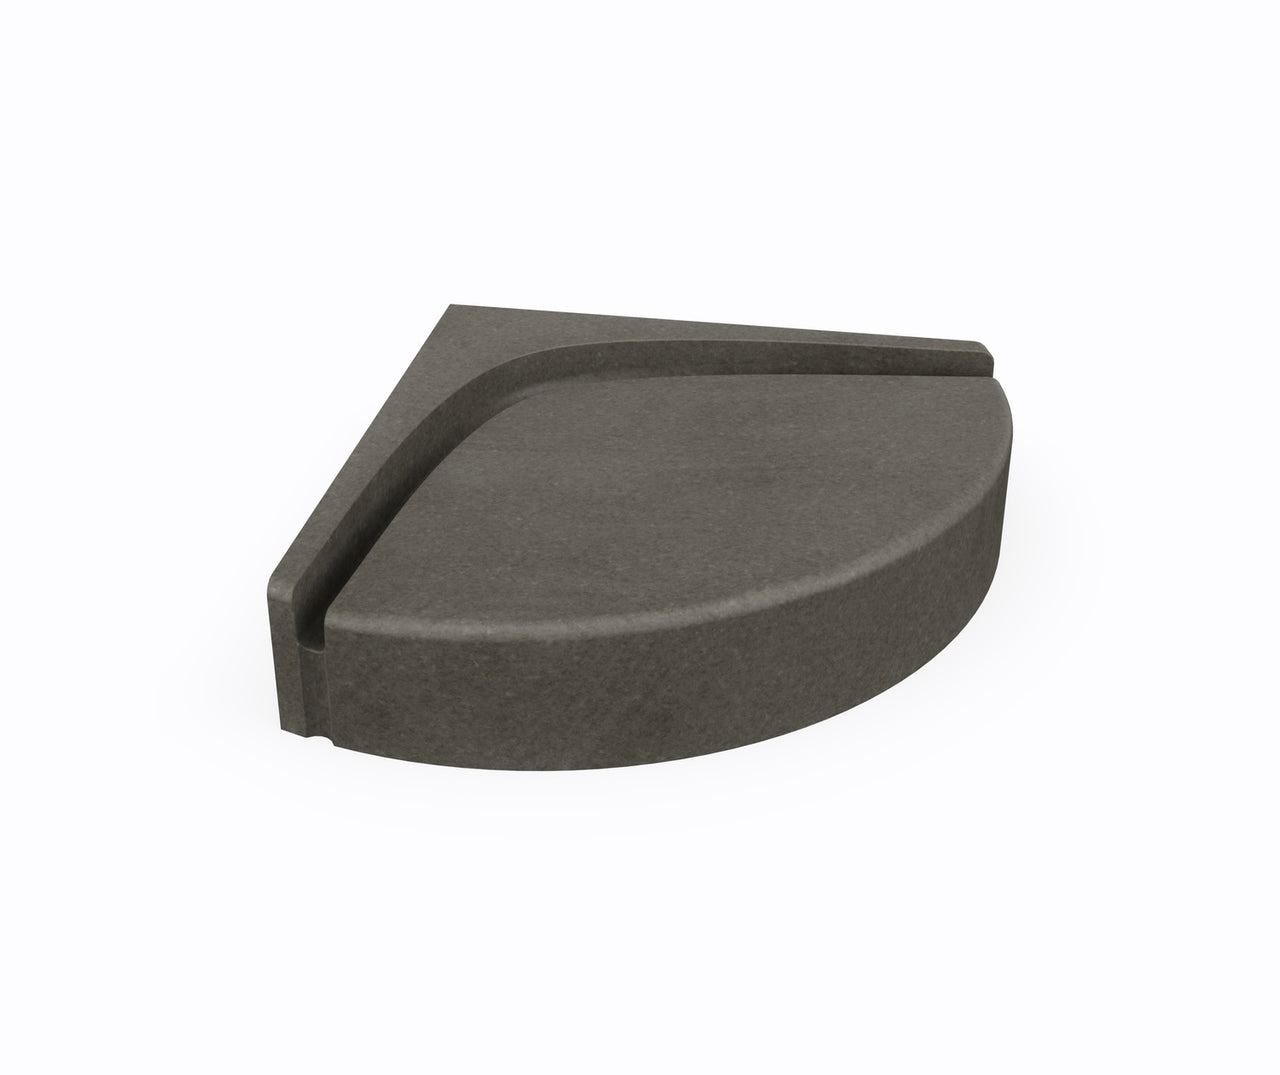 CS-1616 Corner Shower Seat in Charcoal Gray